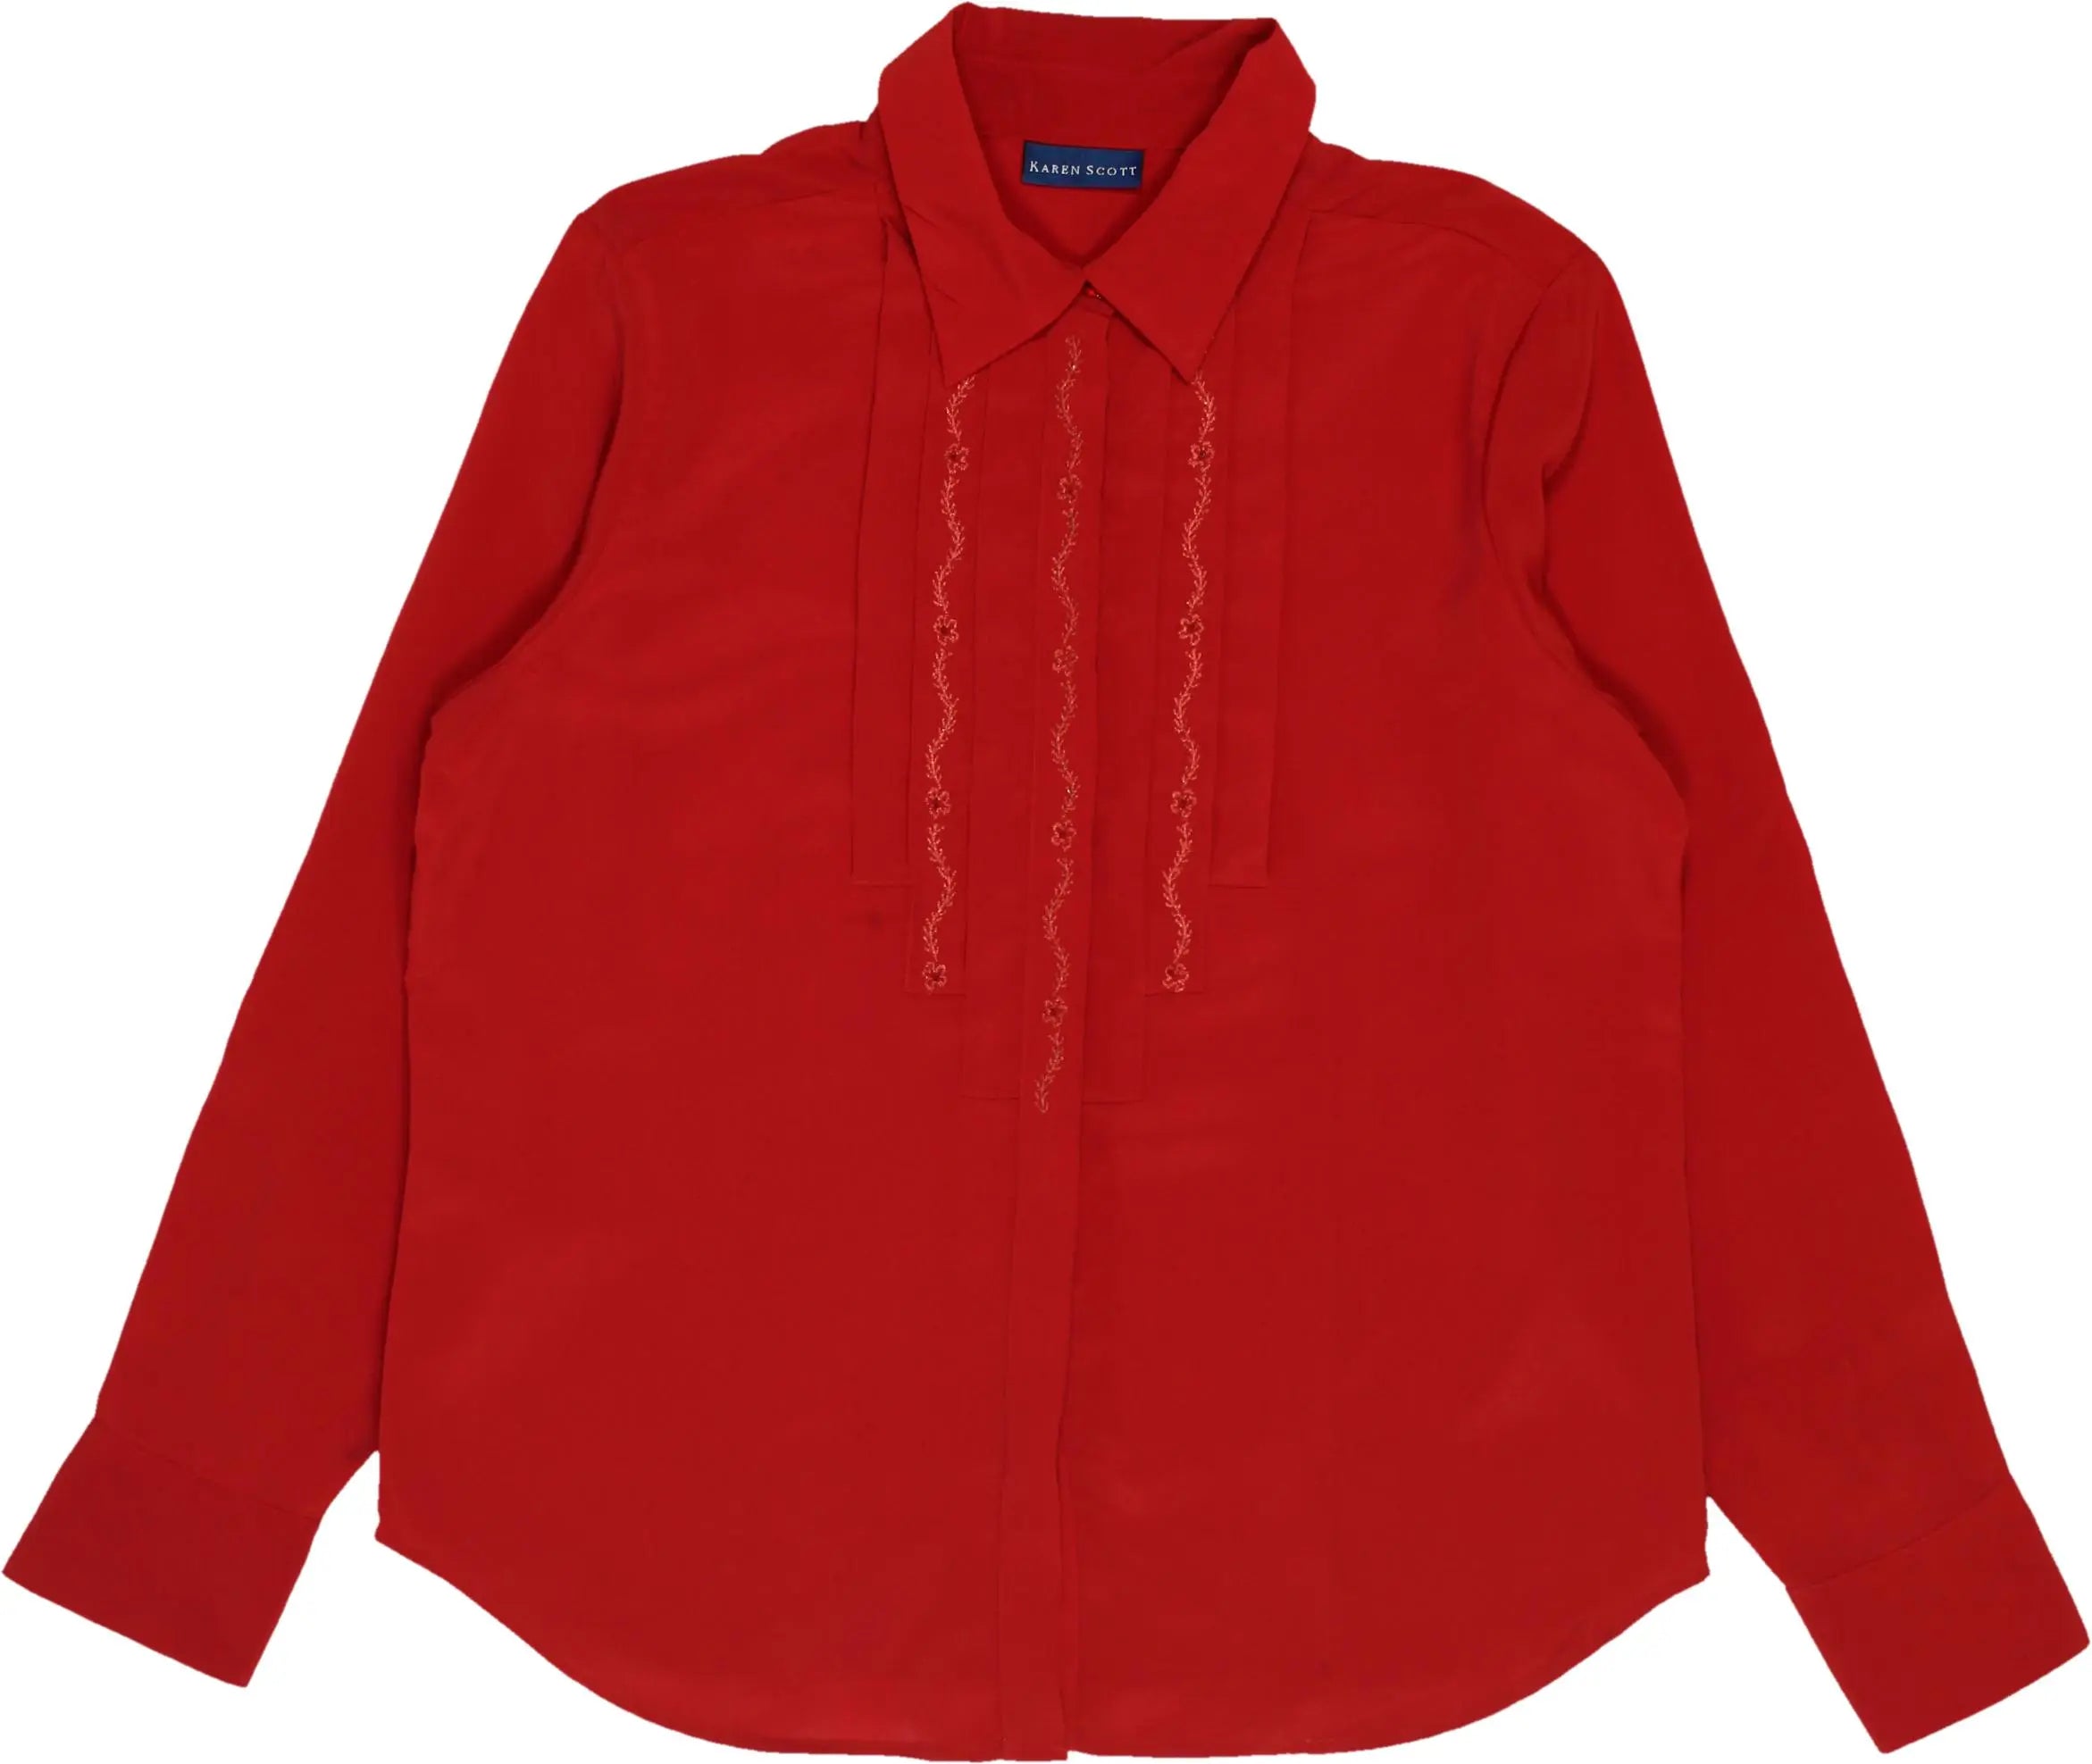 Karen Scott - Red Blouse- ThriftTale.com - Vintage and second handclothing